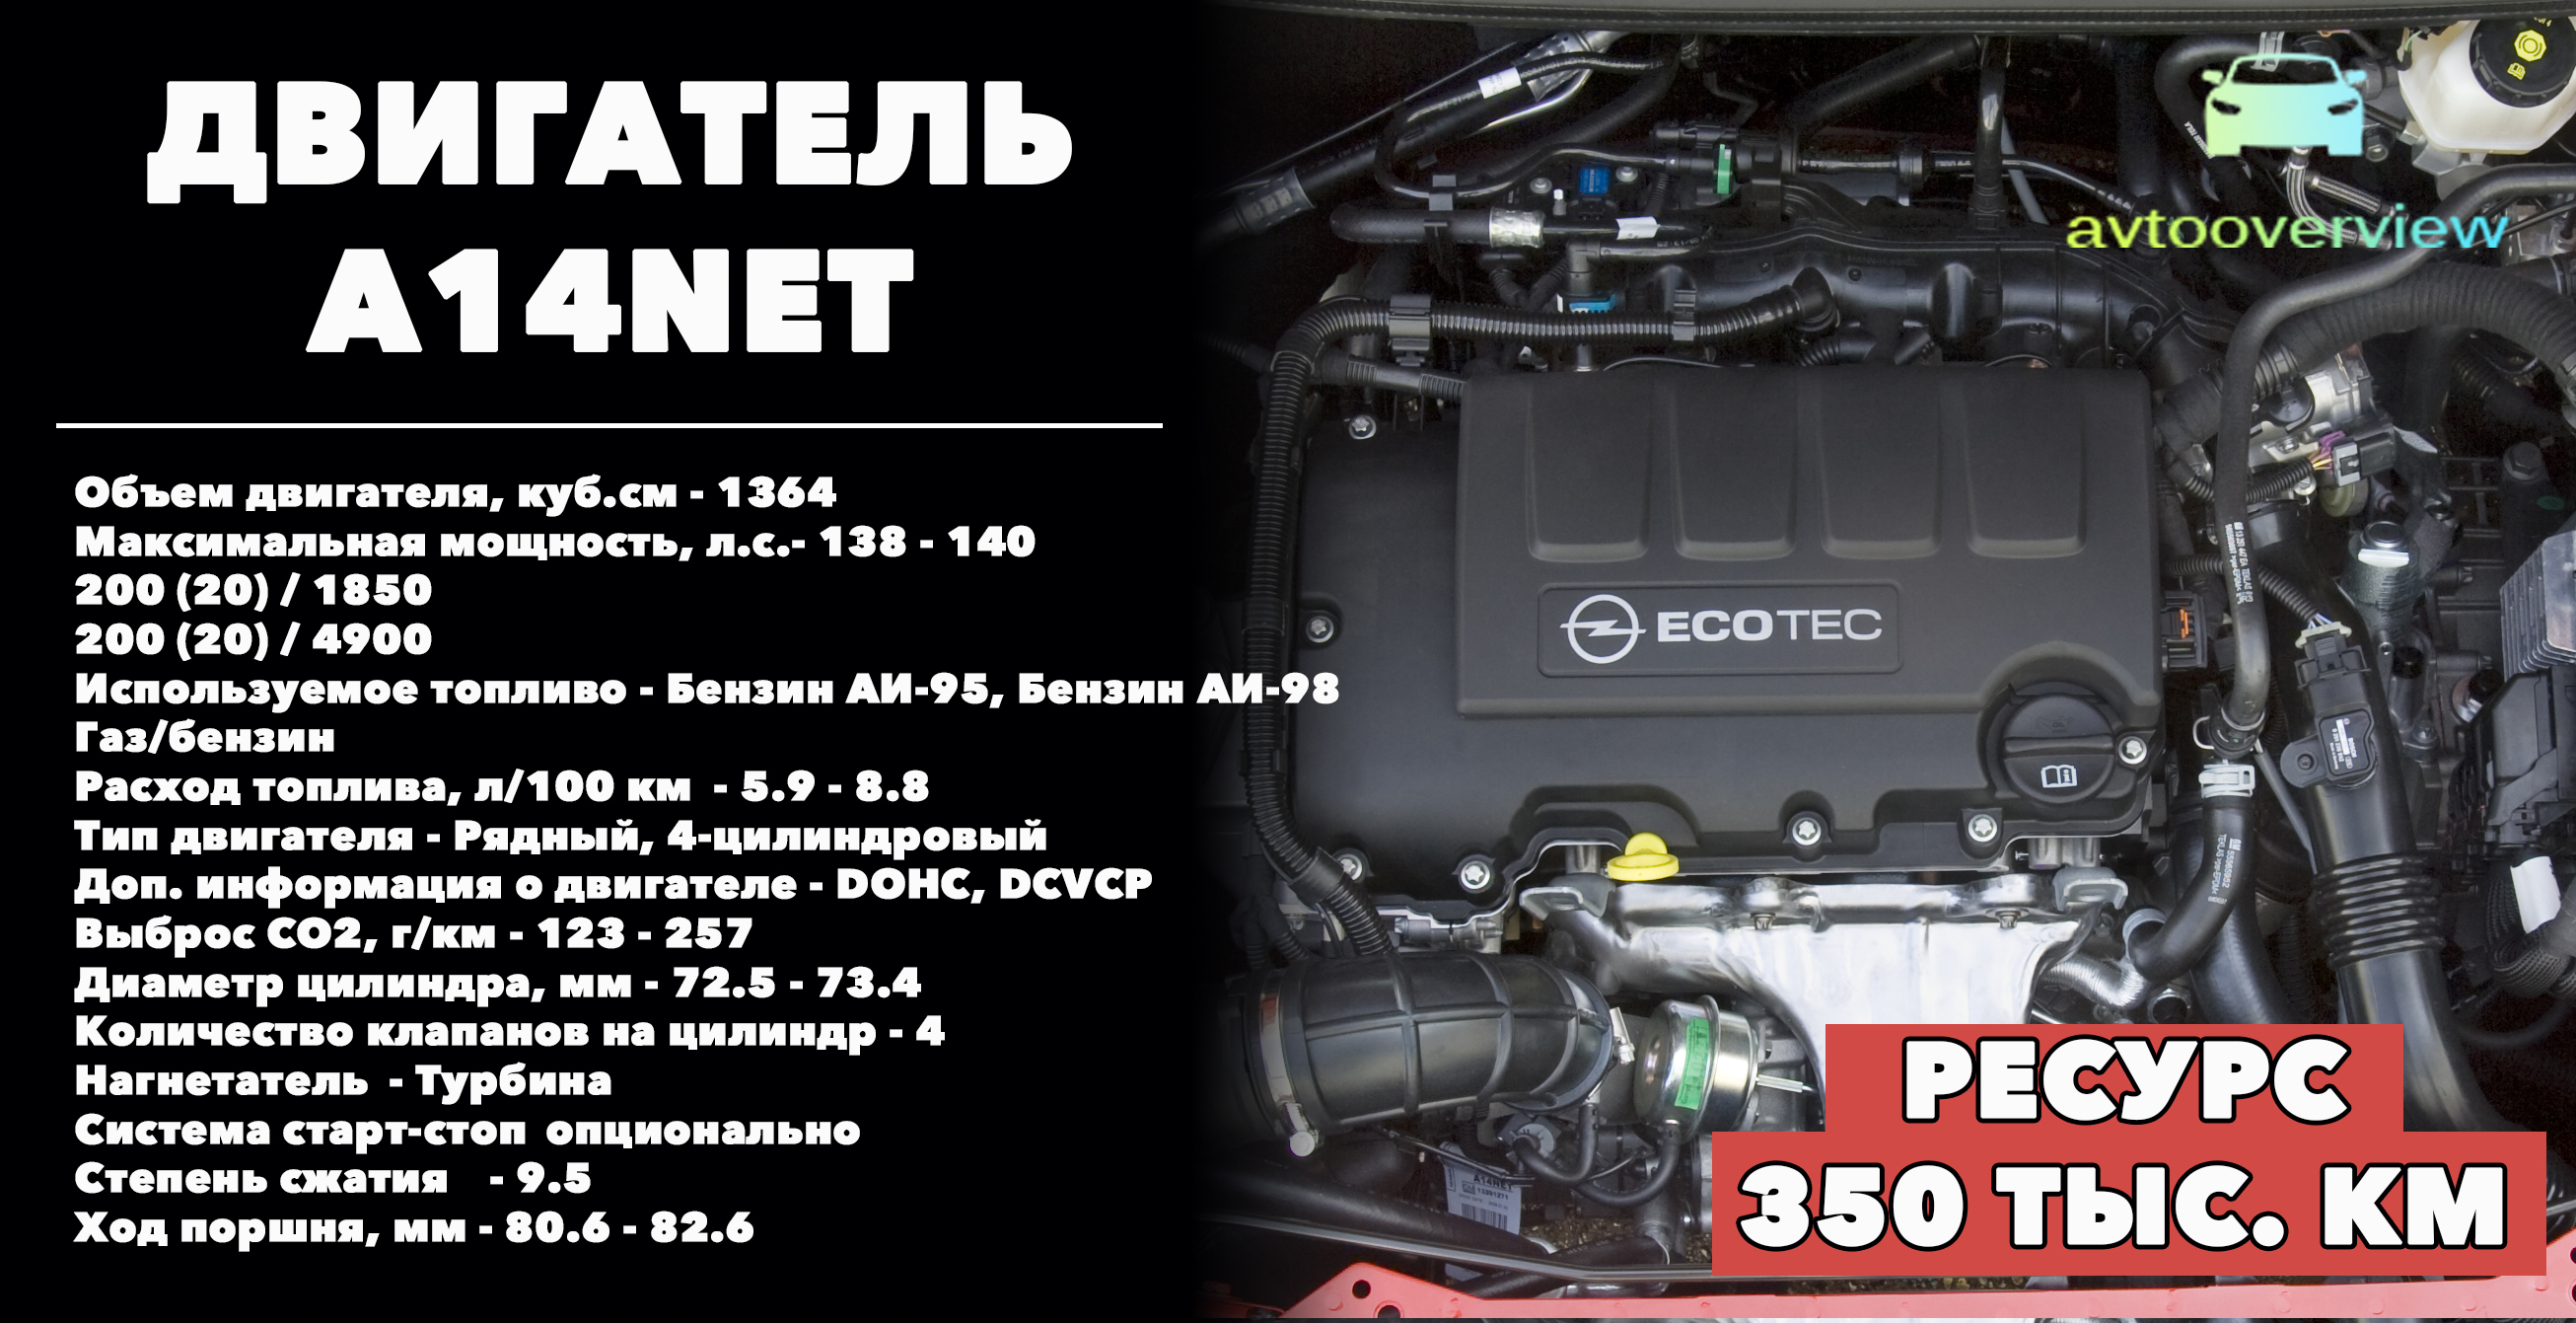 Opel a14net. Номер двигателя Опель a14net. Astra-j / двигатель:a14net масло. A14net номер двигателя.